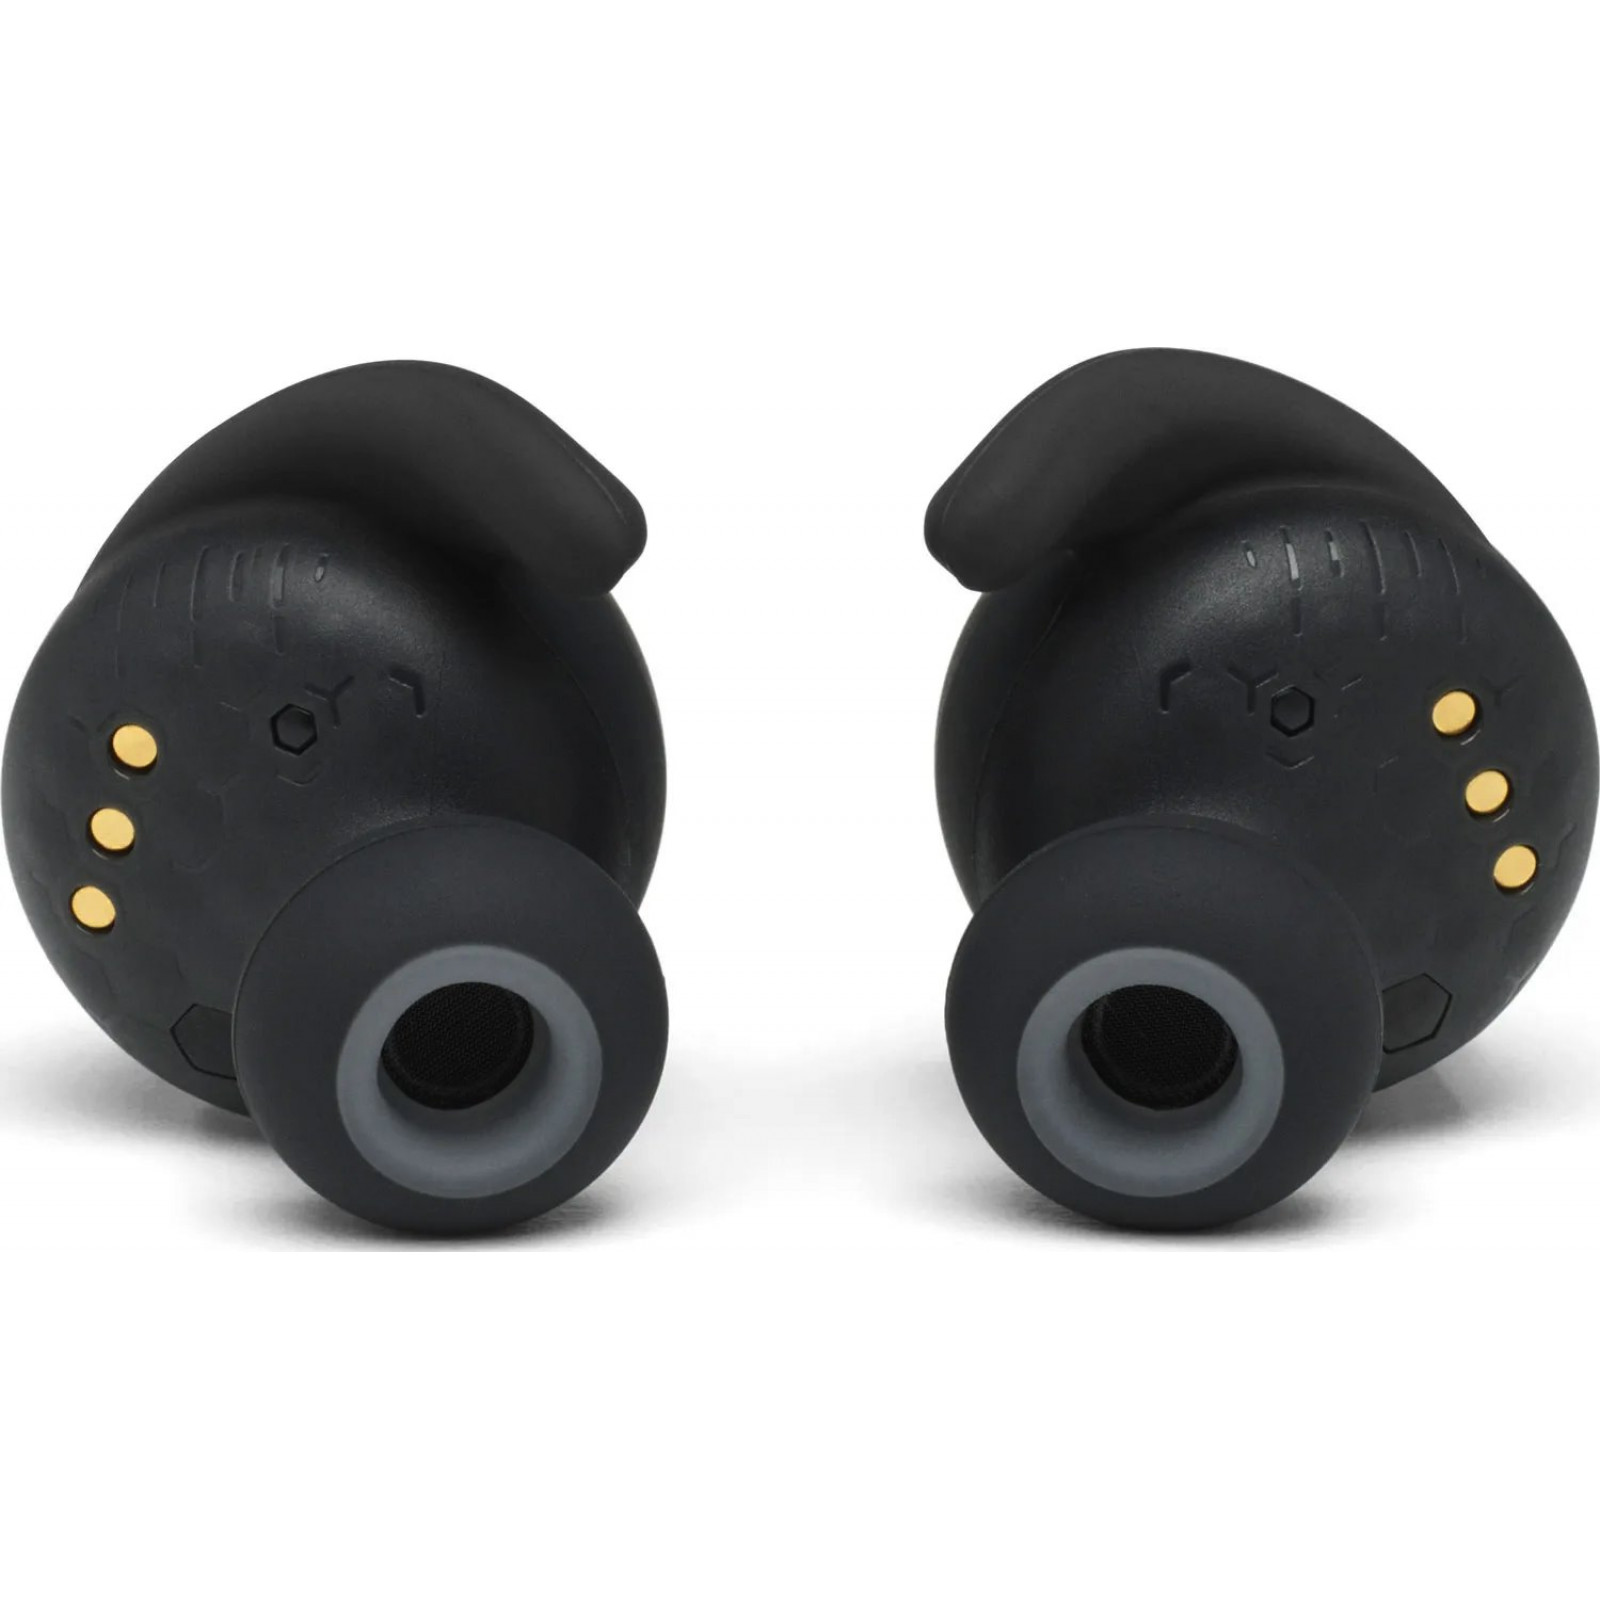 Bluetooth слушалки JBL Reflect Mini NC Wireless Headphones - Черни